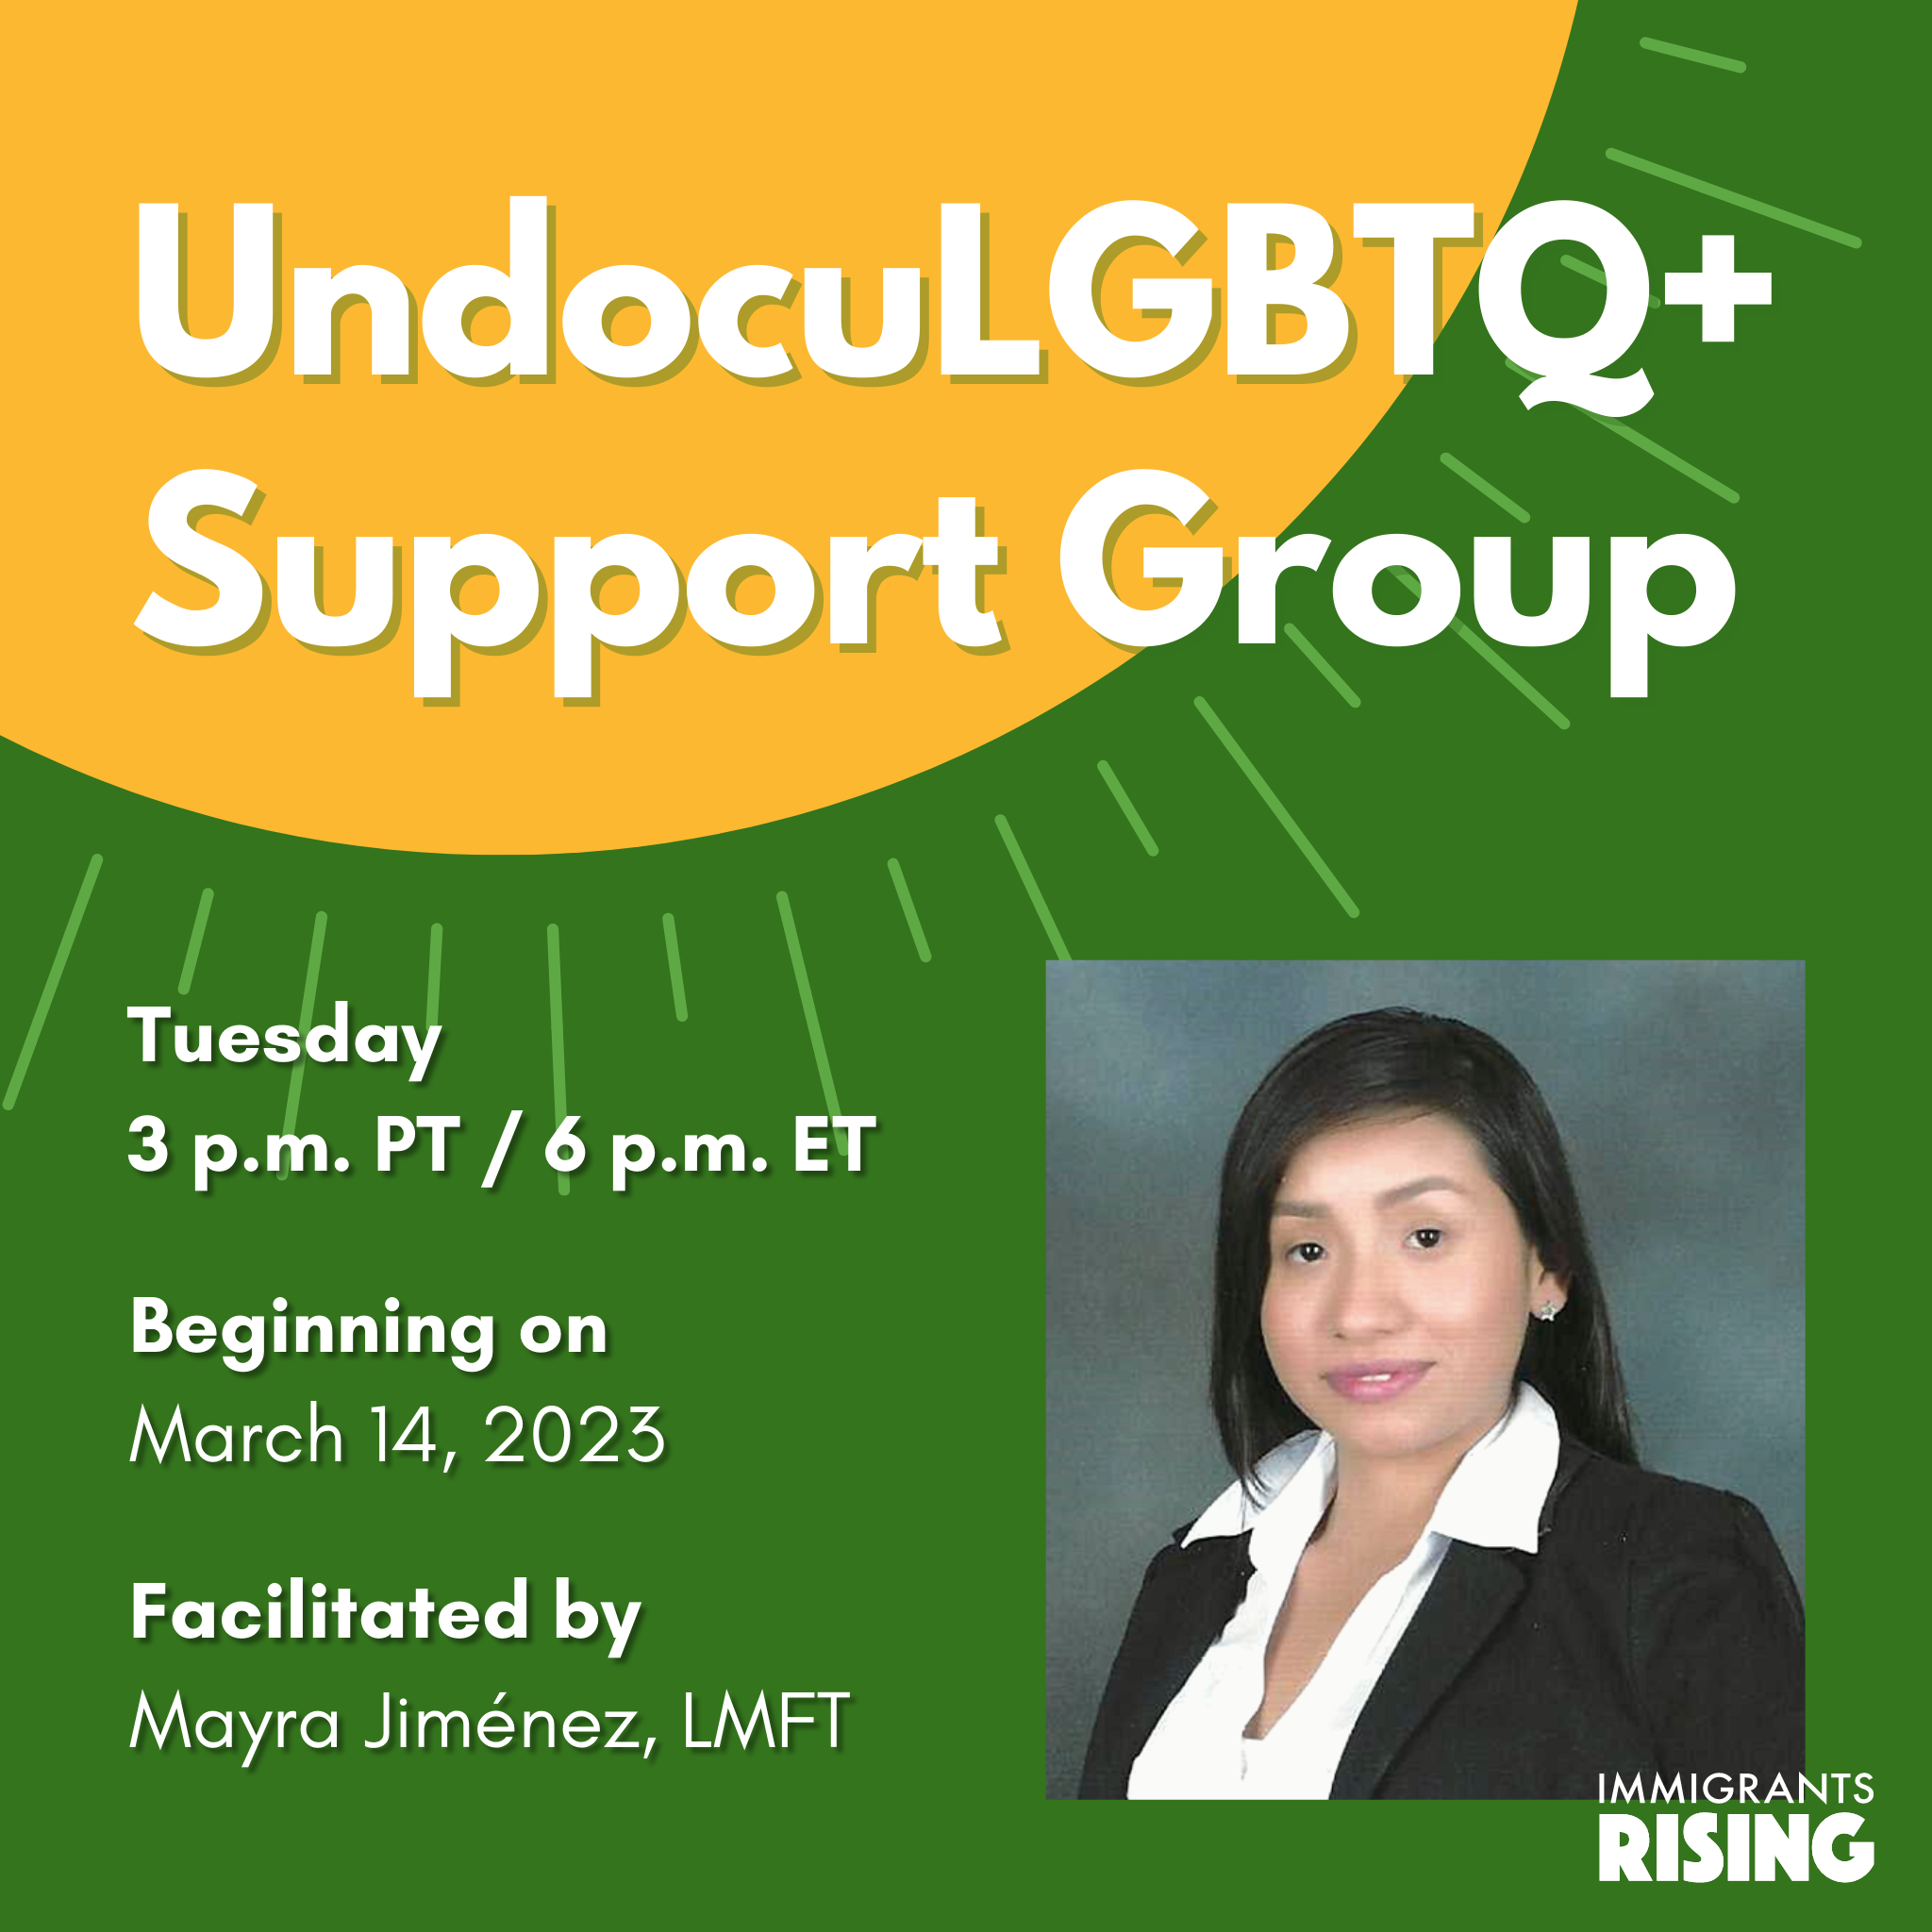 UndocuLGBTQ+ Support Group